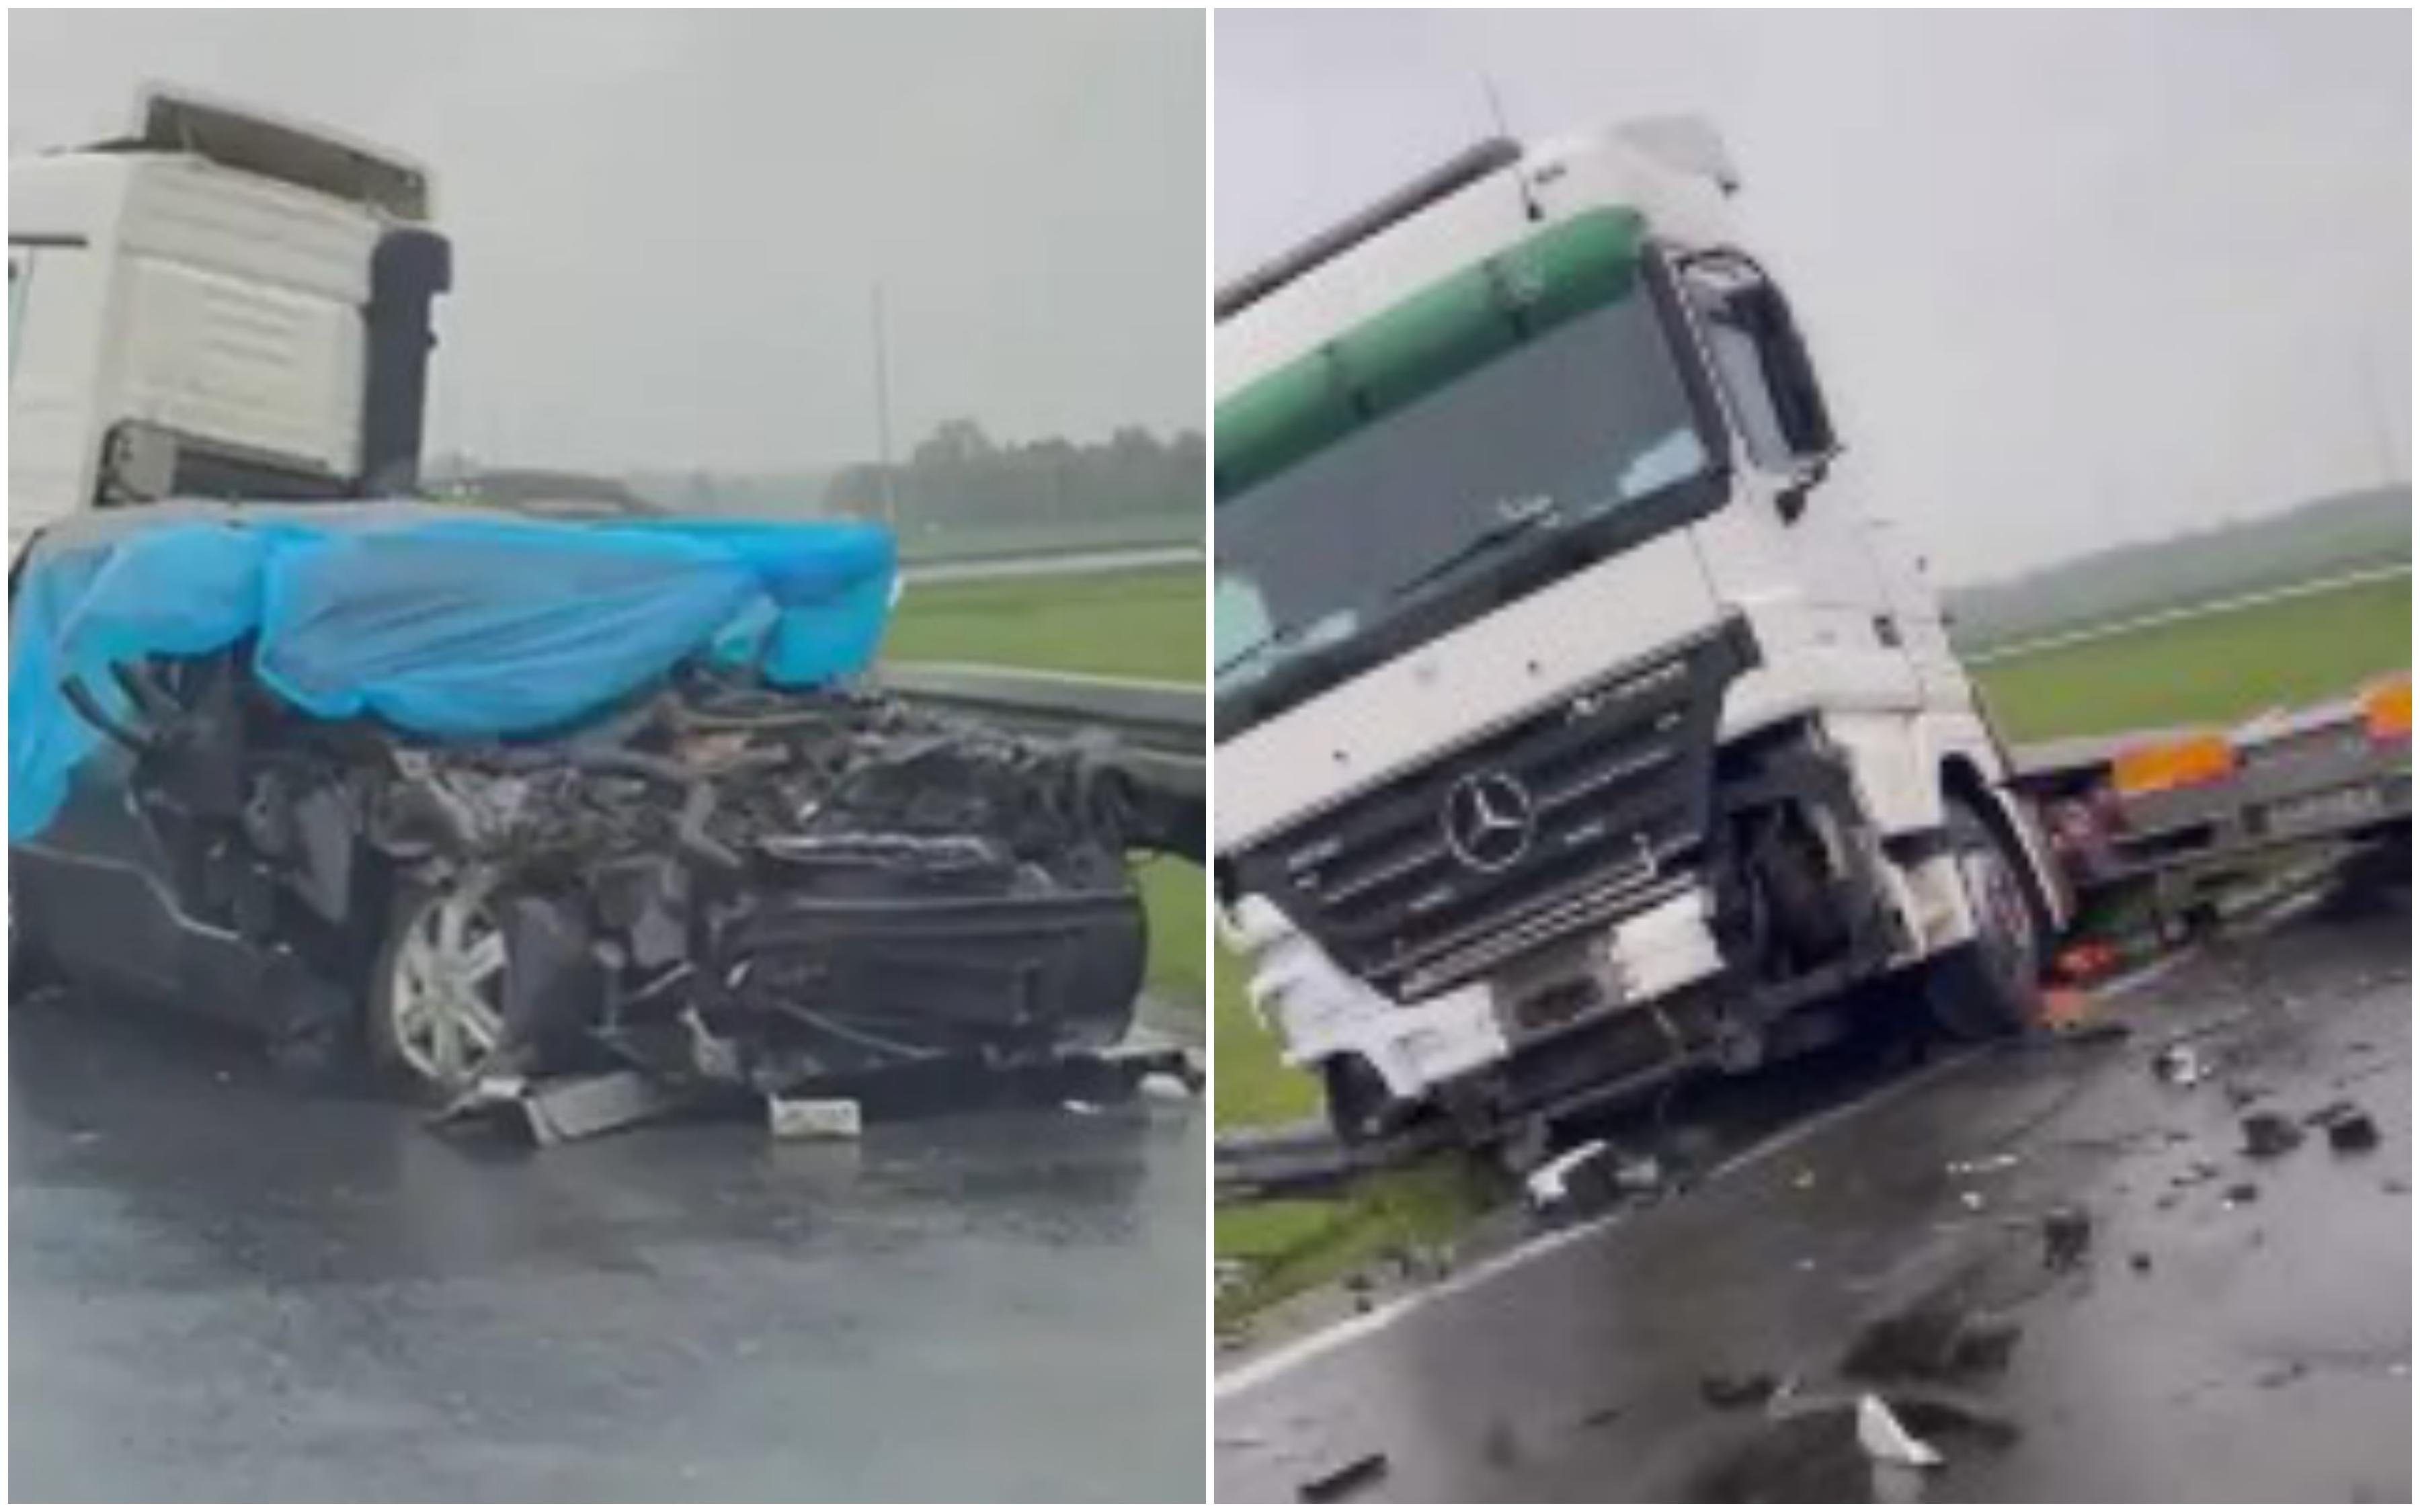 S lica mjesta: Smrskani automobil i oštećeni kamion - Avaz